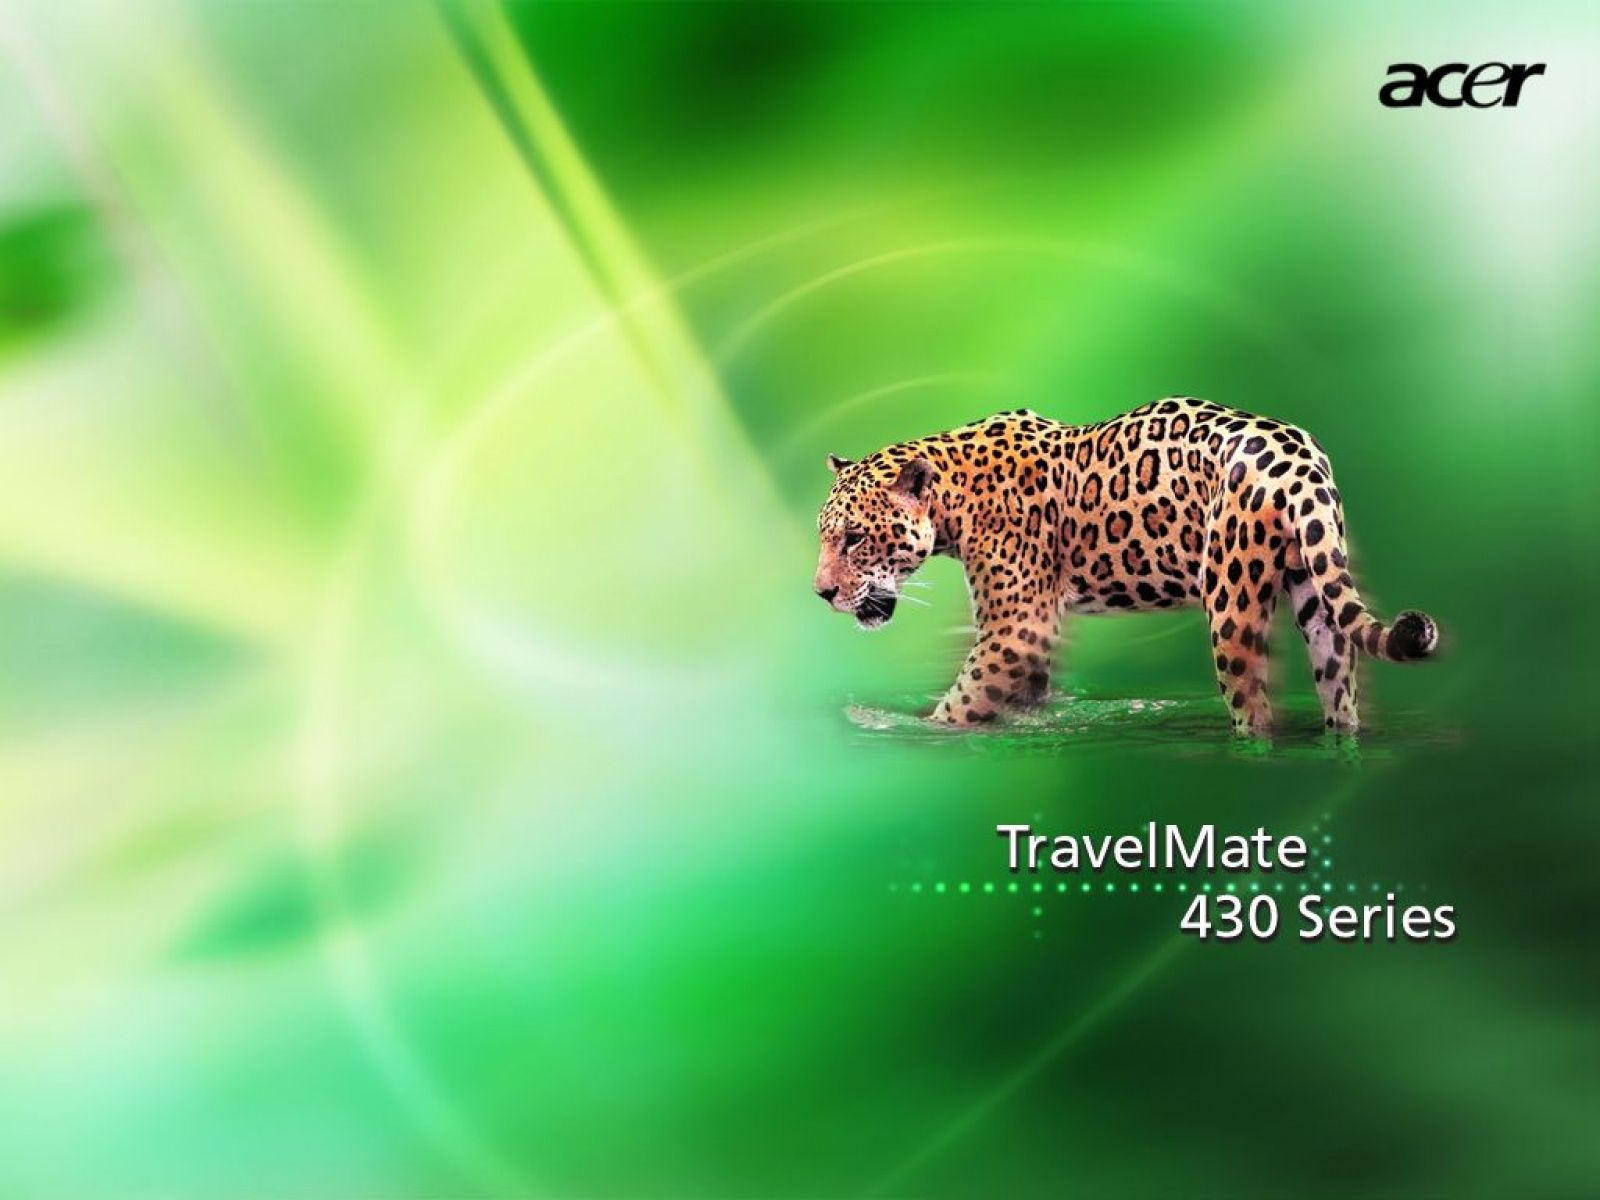 Acer Travelmate 430 Series Wallpaper Desktop #7605 Wallpaper ...